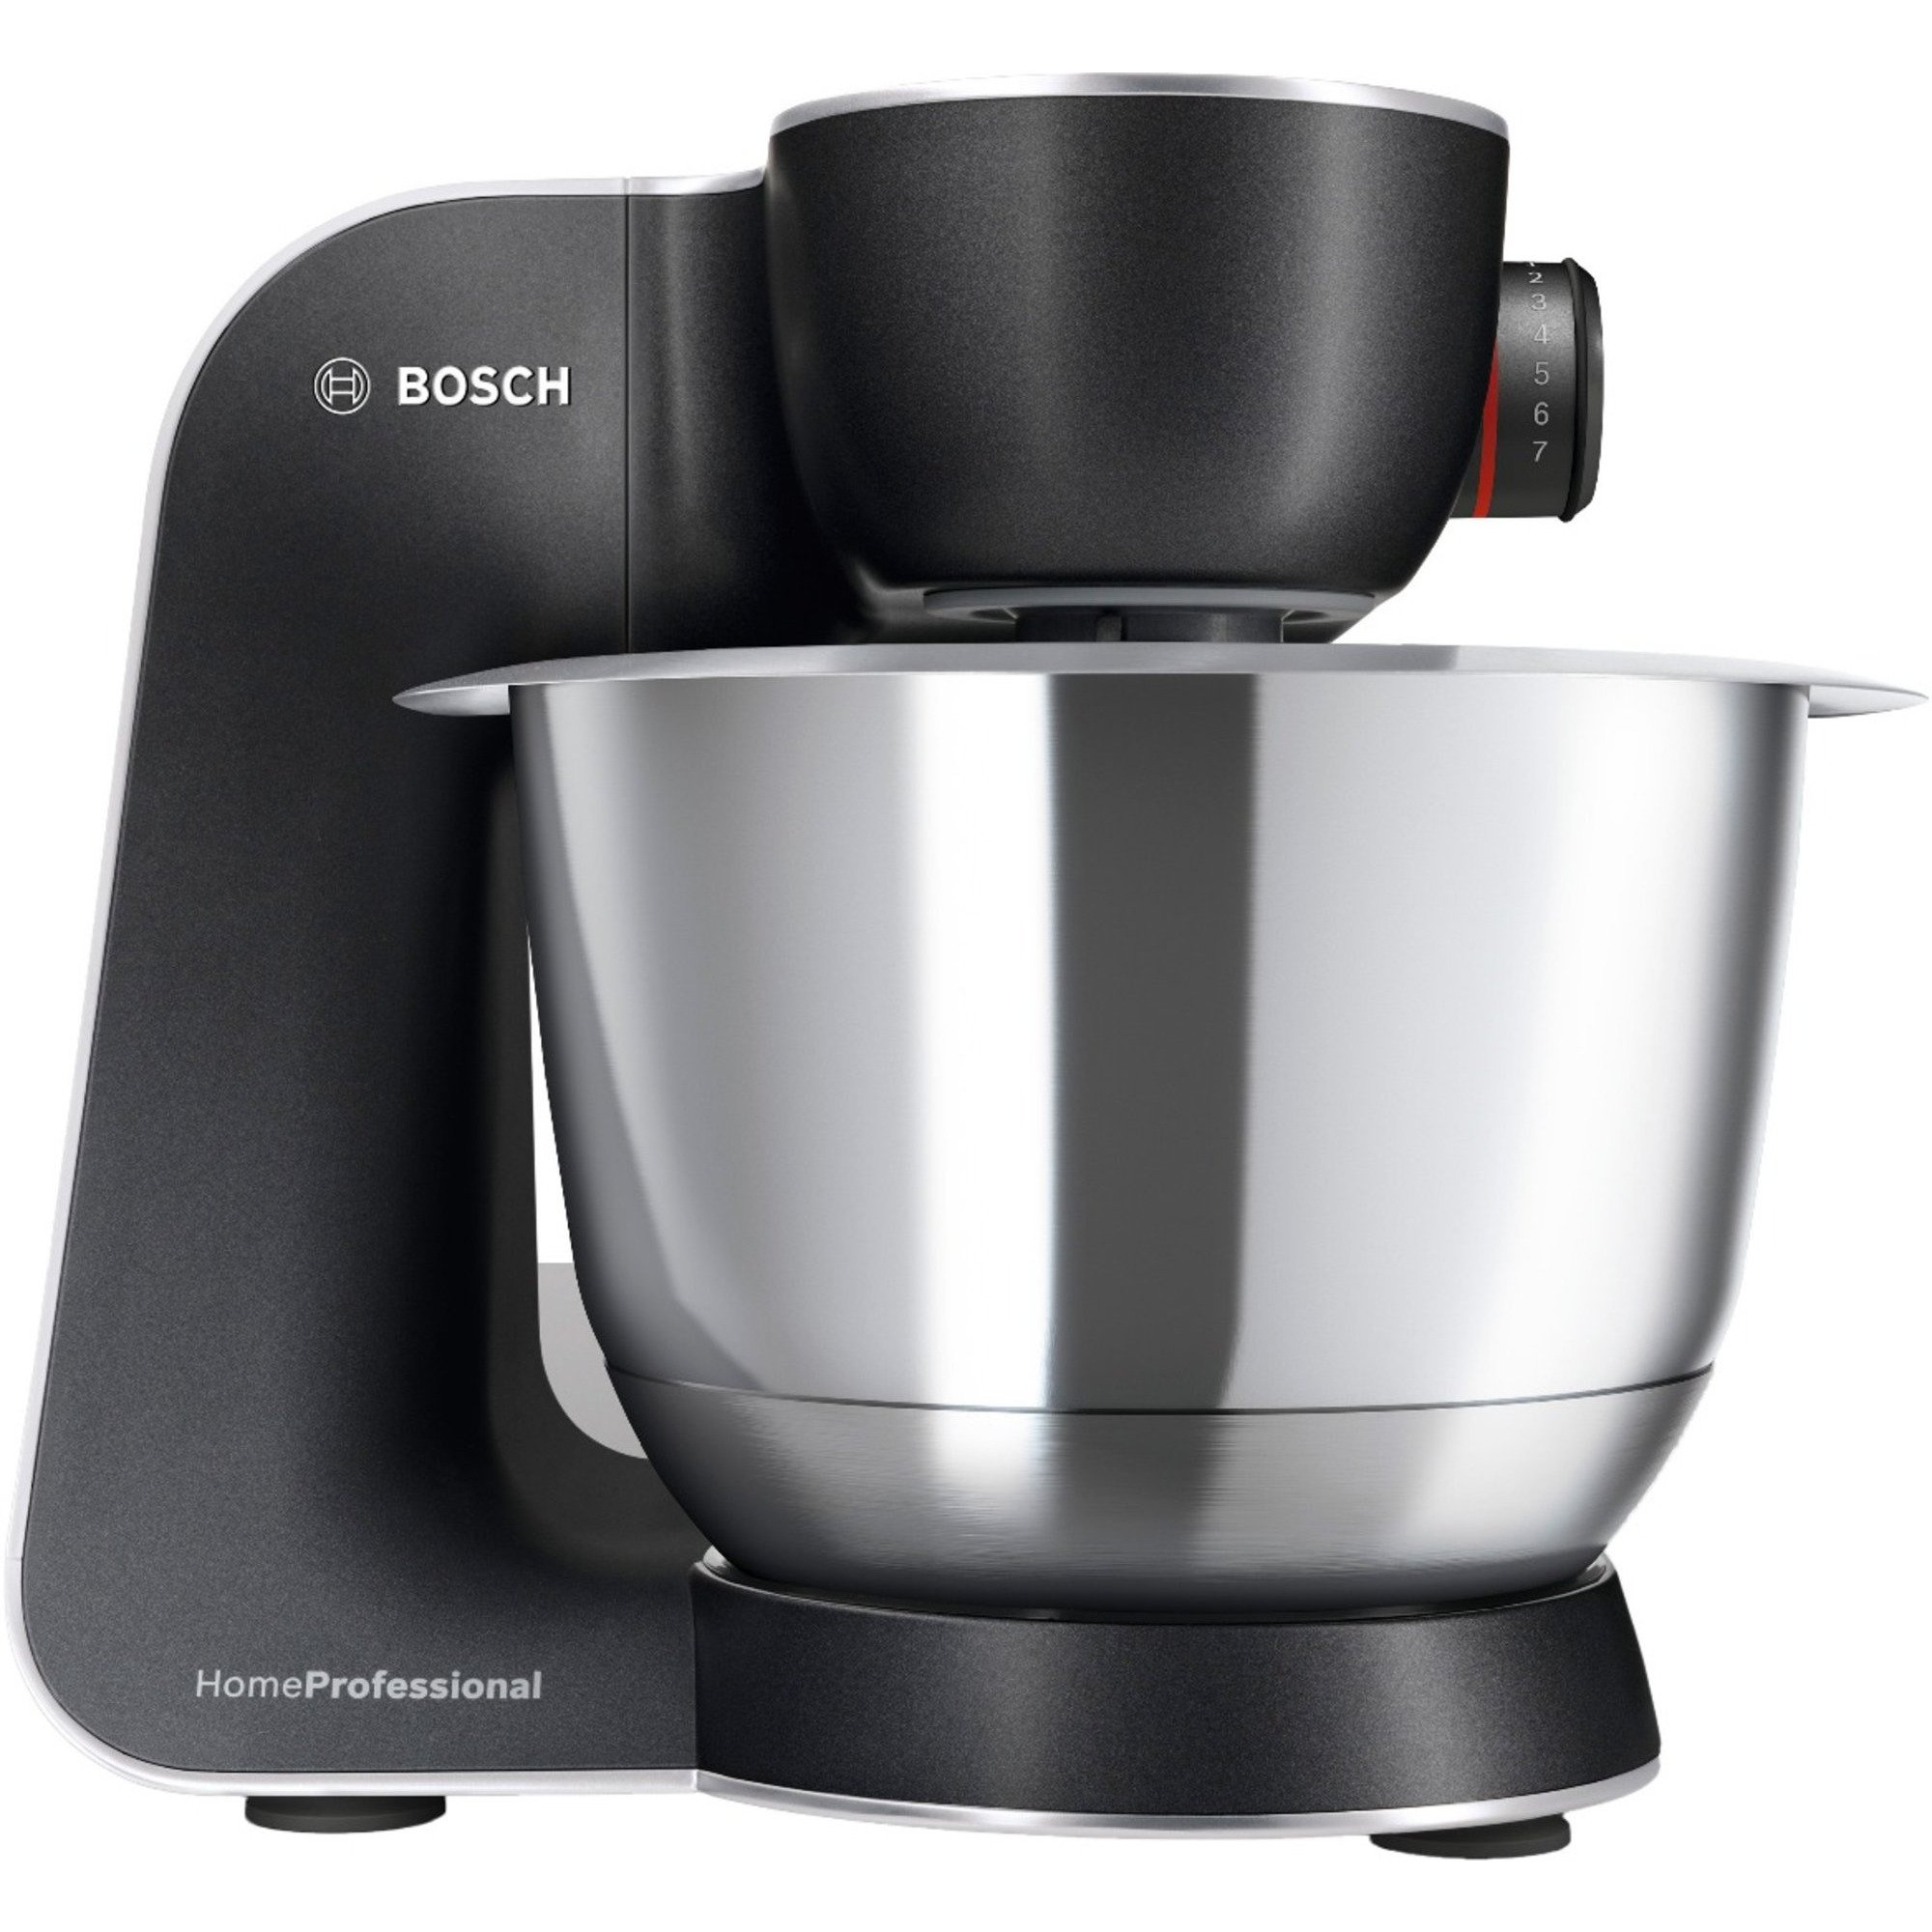 Bosch MUM59 Home Professional Köksmaskin